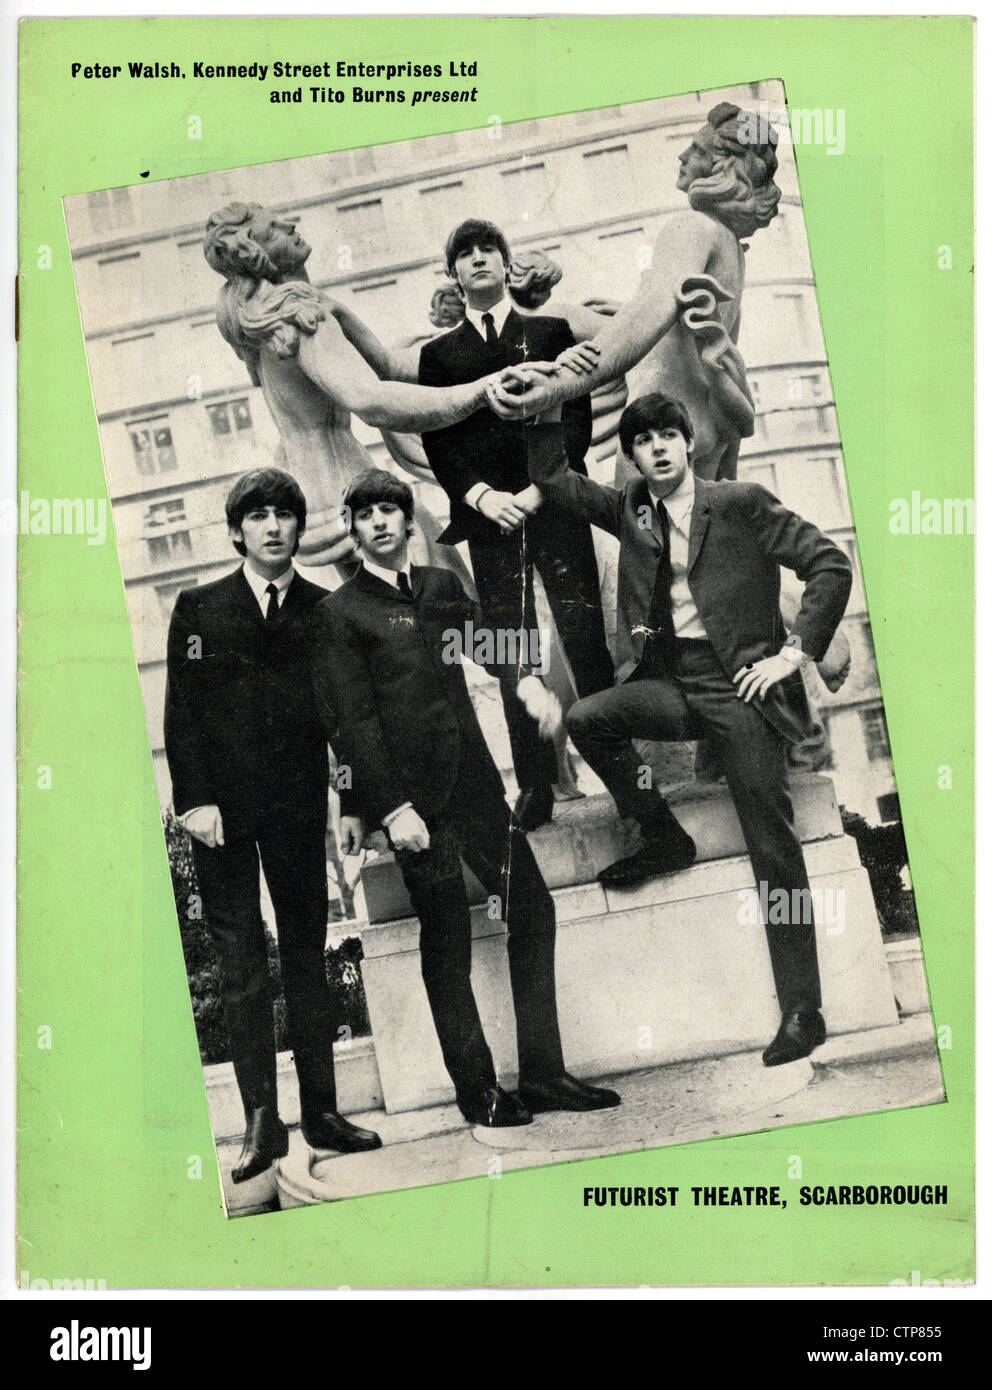 001098 - The Beatles Scarborough Futurist Theatre 1964 Concert Programme Stock Photo